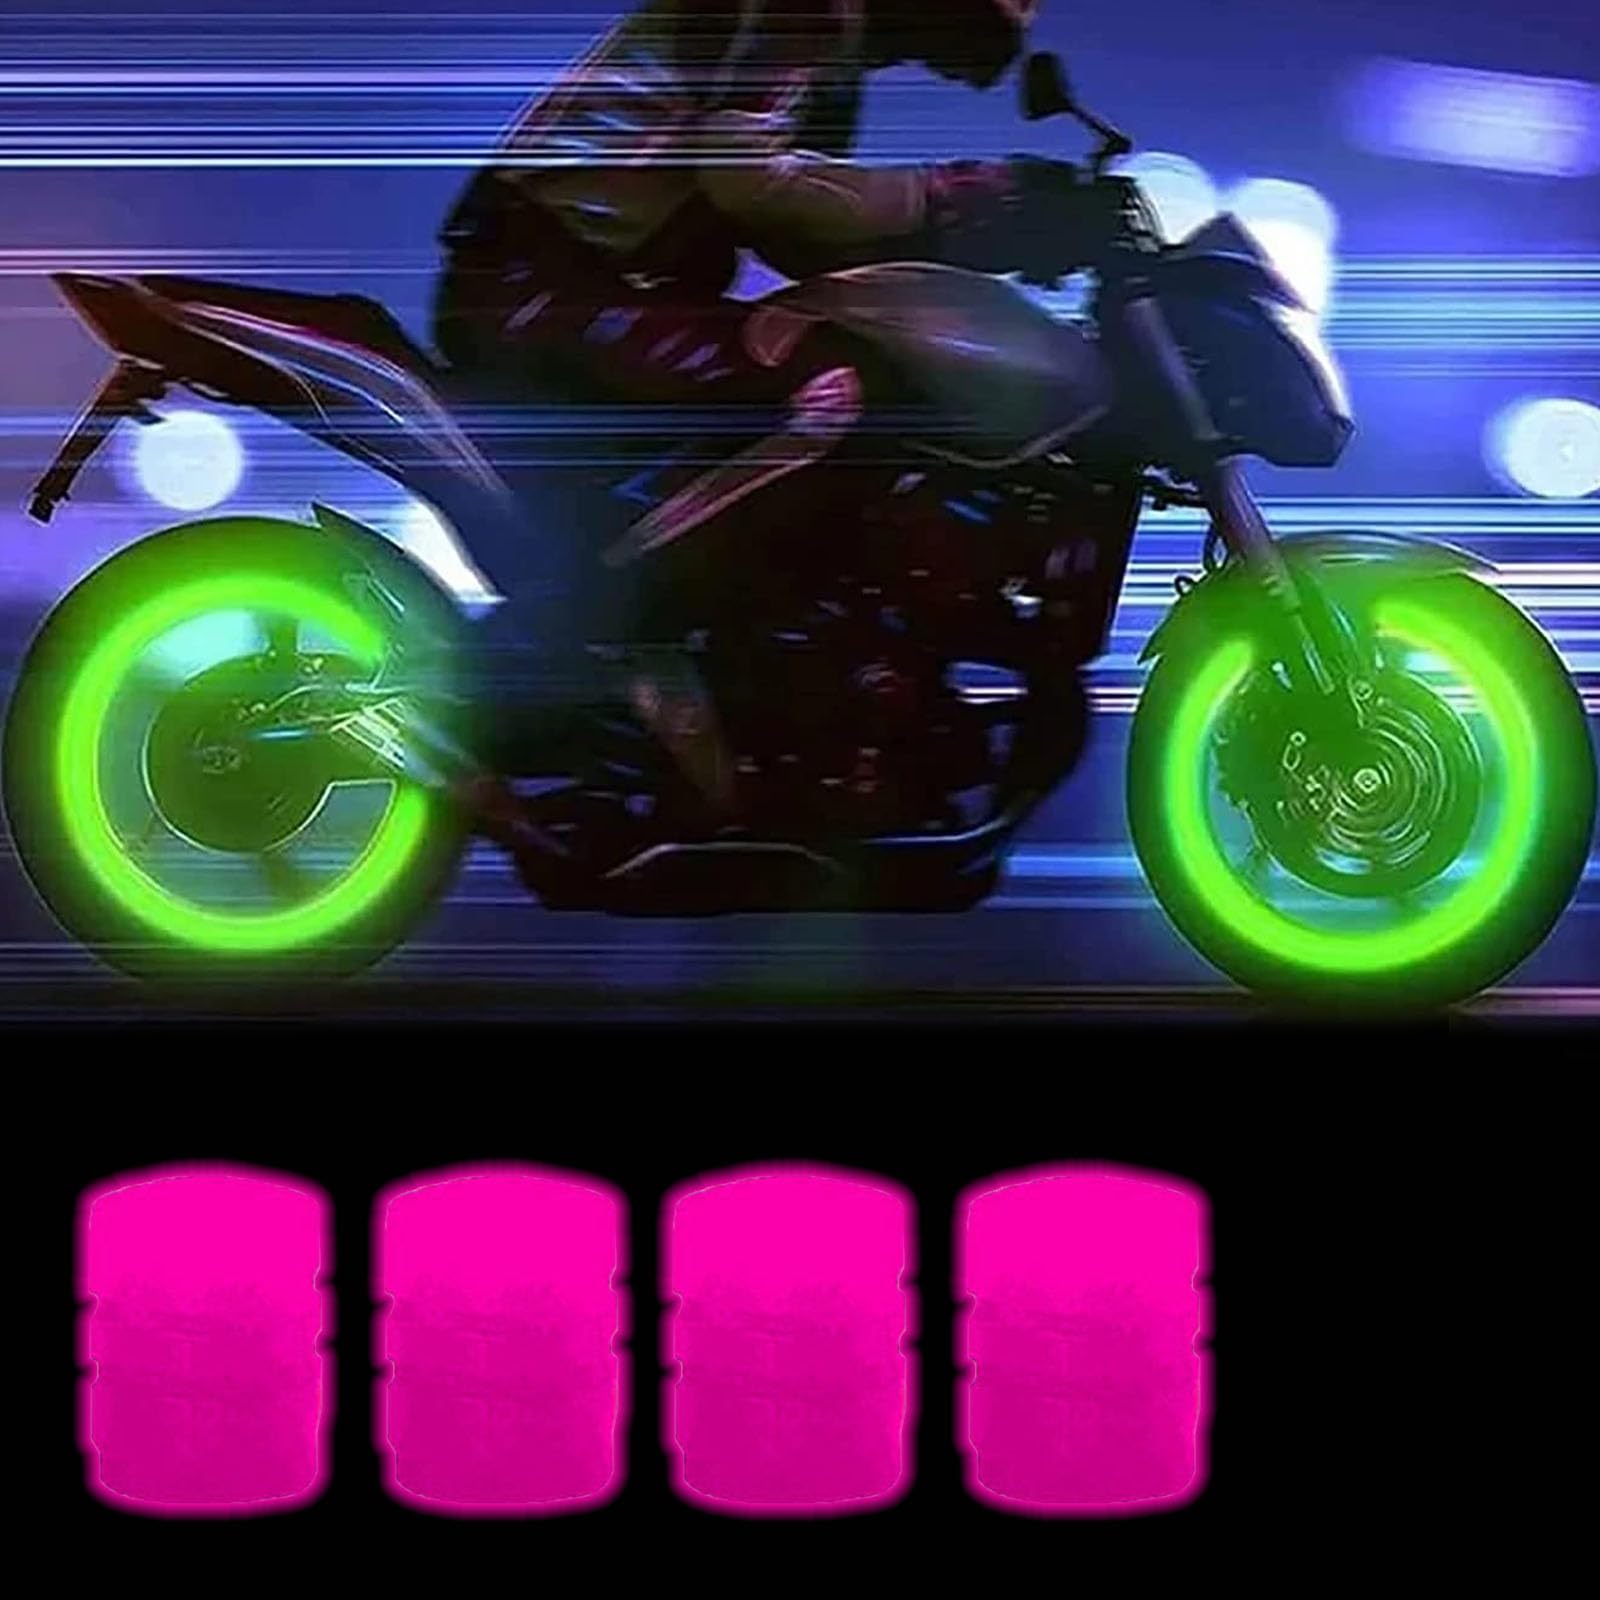 Donubiiu Glow In The Dark Tire Valve Caps, Luminous Car Tire Valve Stem Caps, Light Up Tire Valve Caps, Universal Fluorescent Glowing Valve Caps for Cars, Bicycle, Trucks, SUV, Motorbike (4pcs pink) von Donubiiu